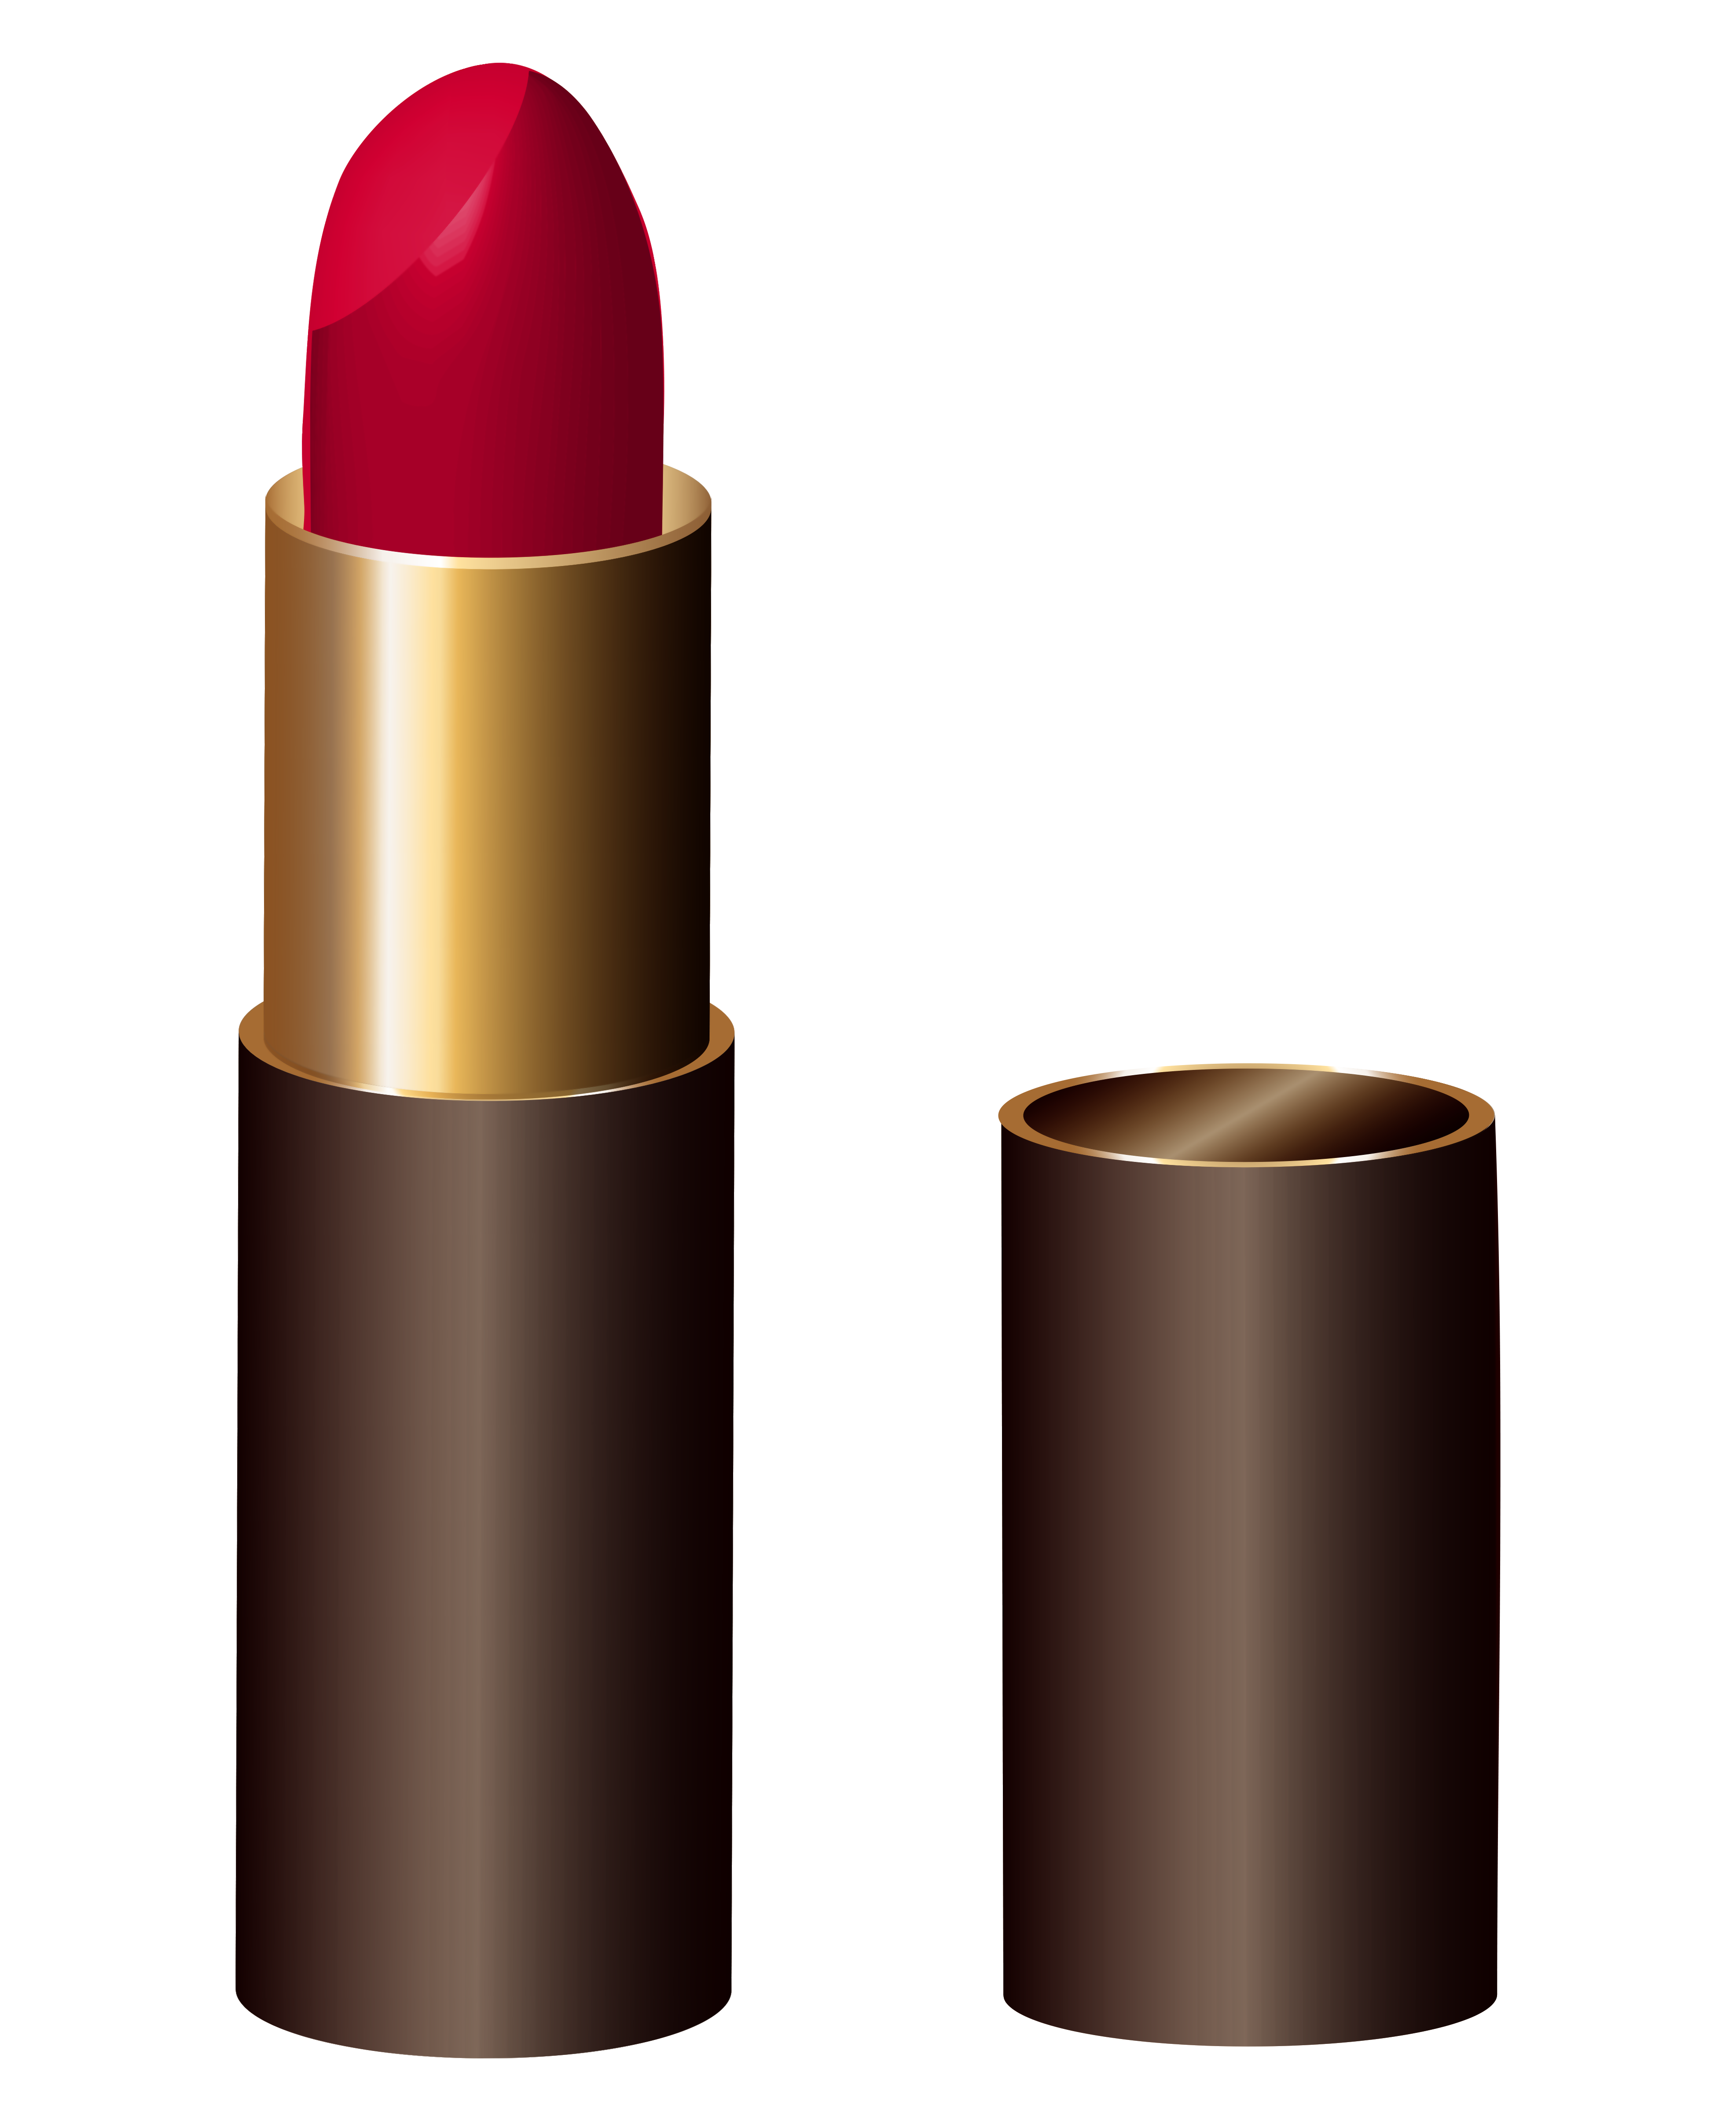 Free clipart image lipstick 